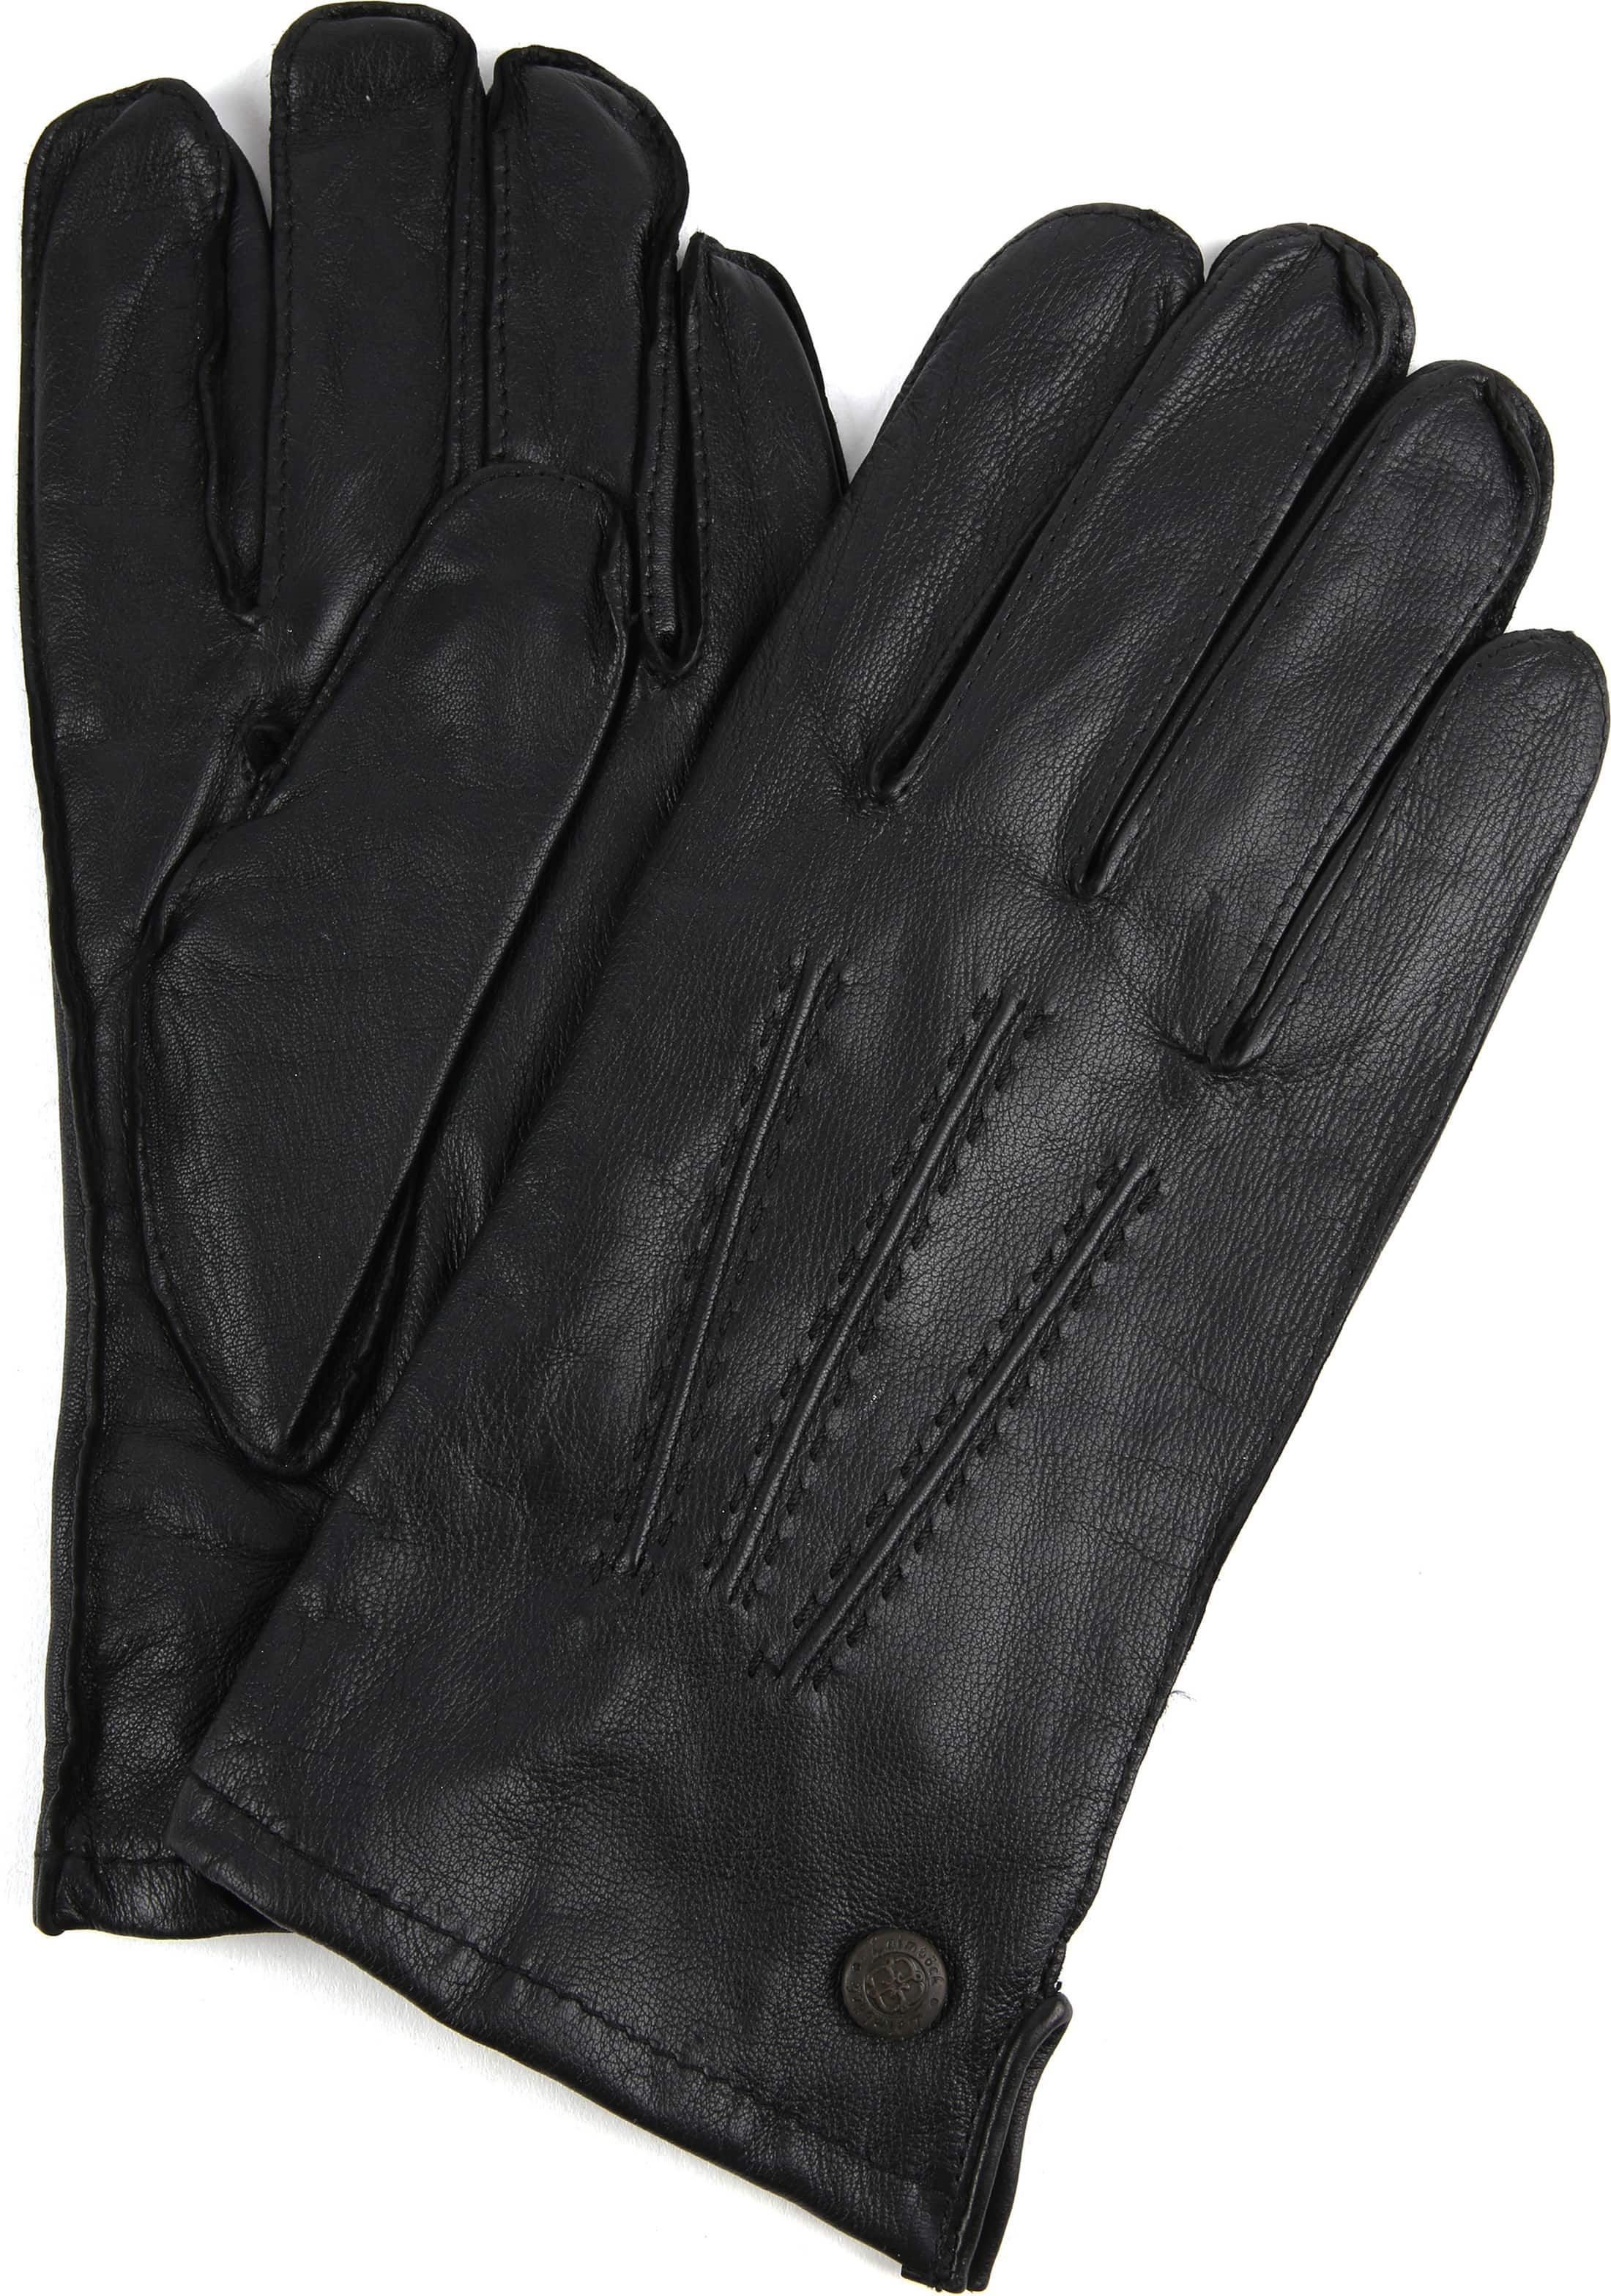 Laimbock Dudley Gloves Black size 8.5